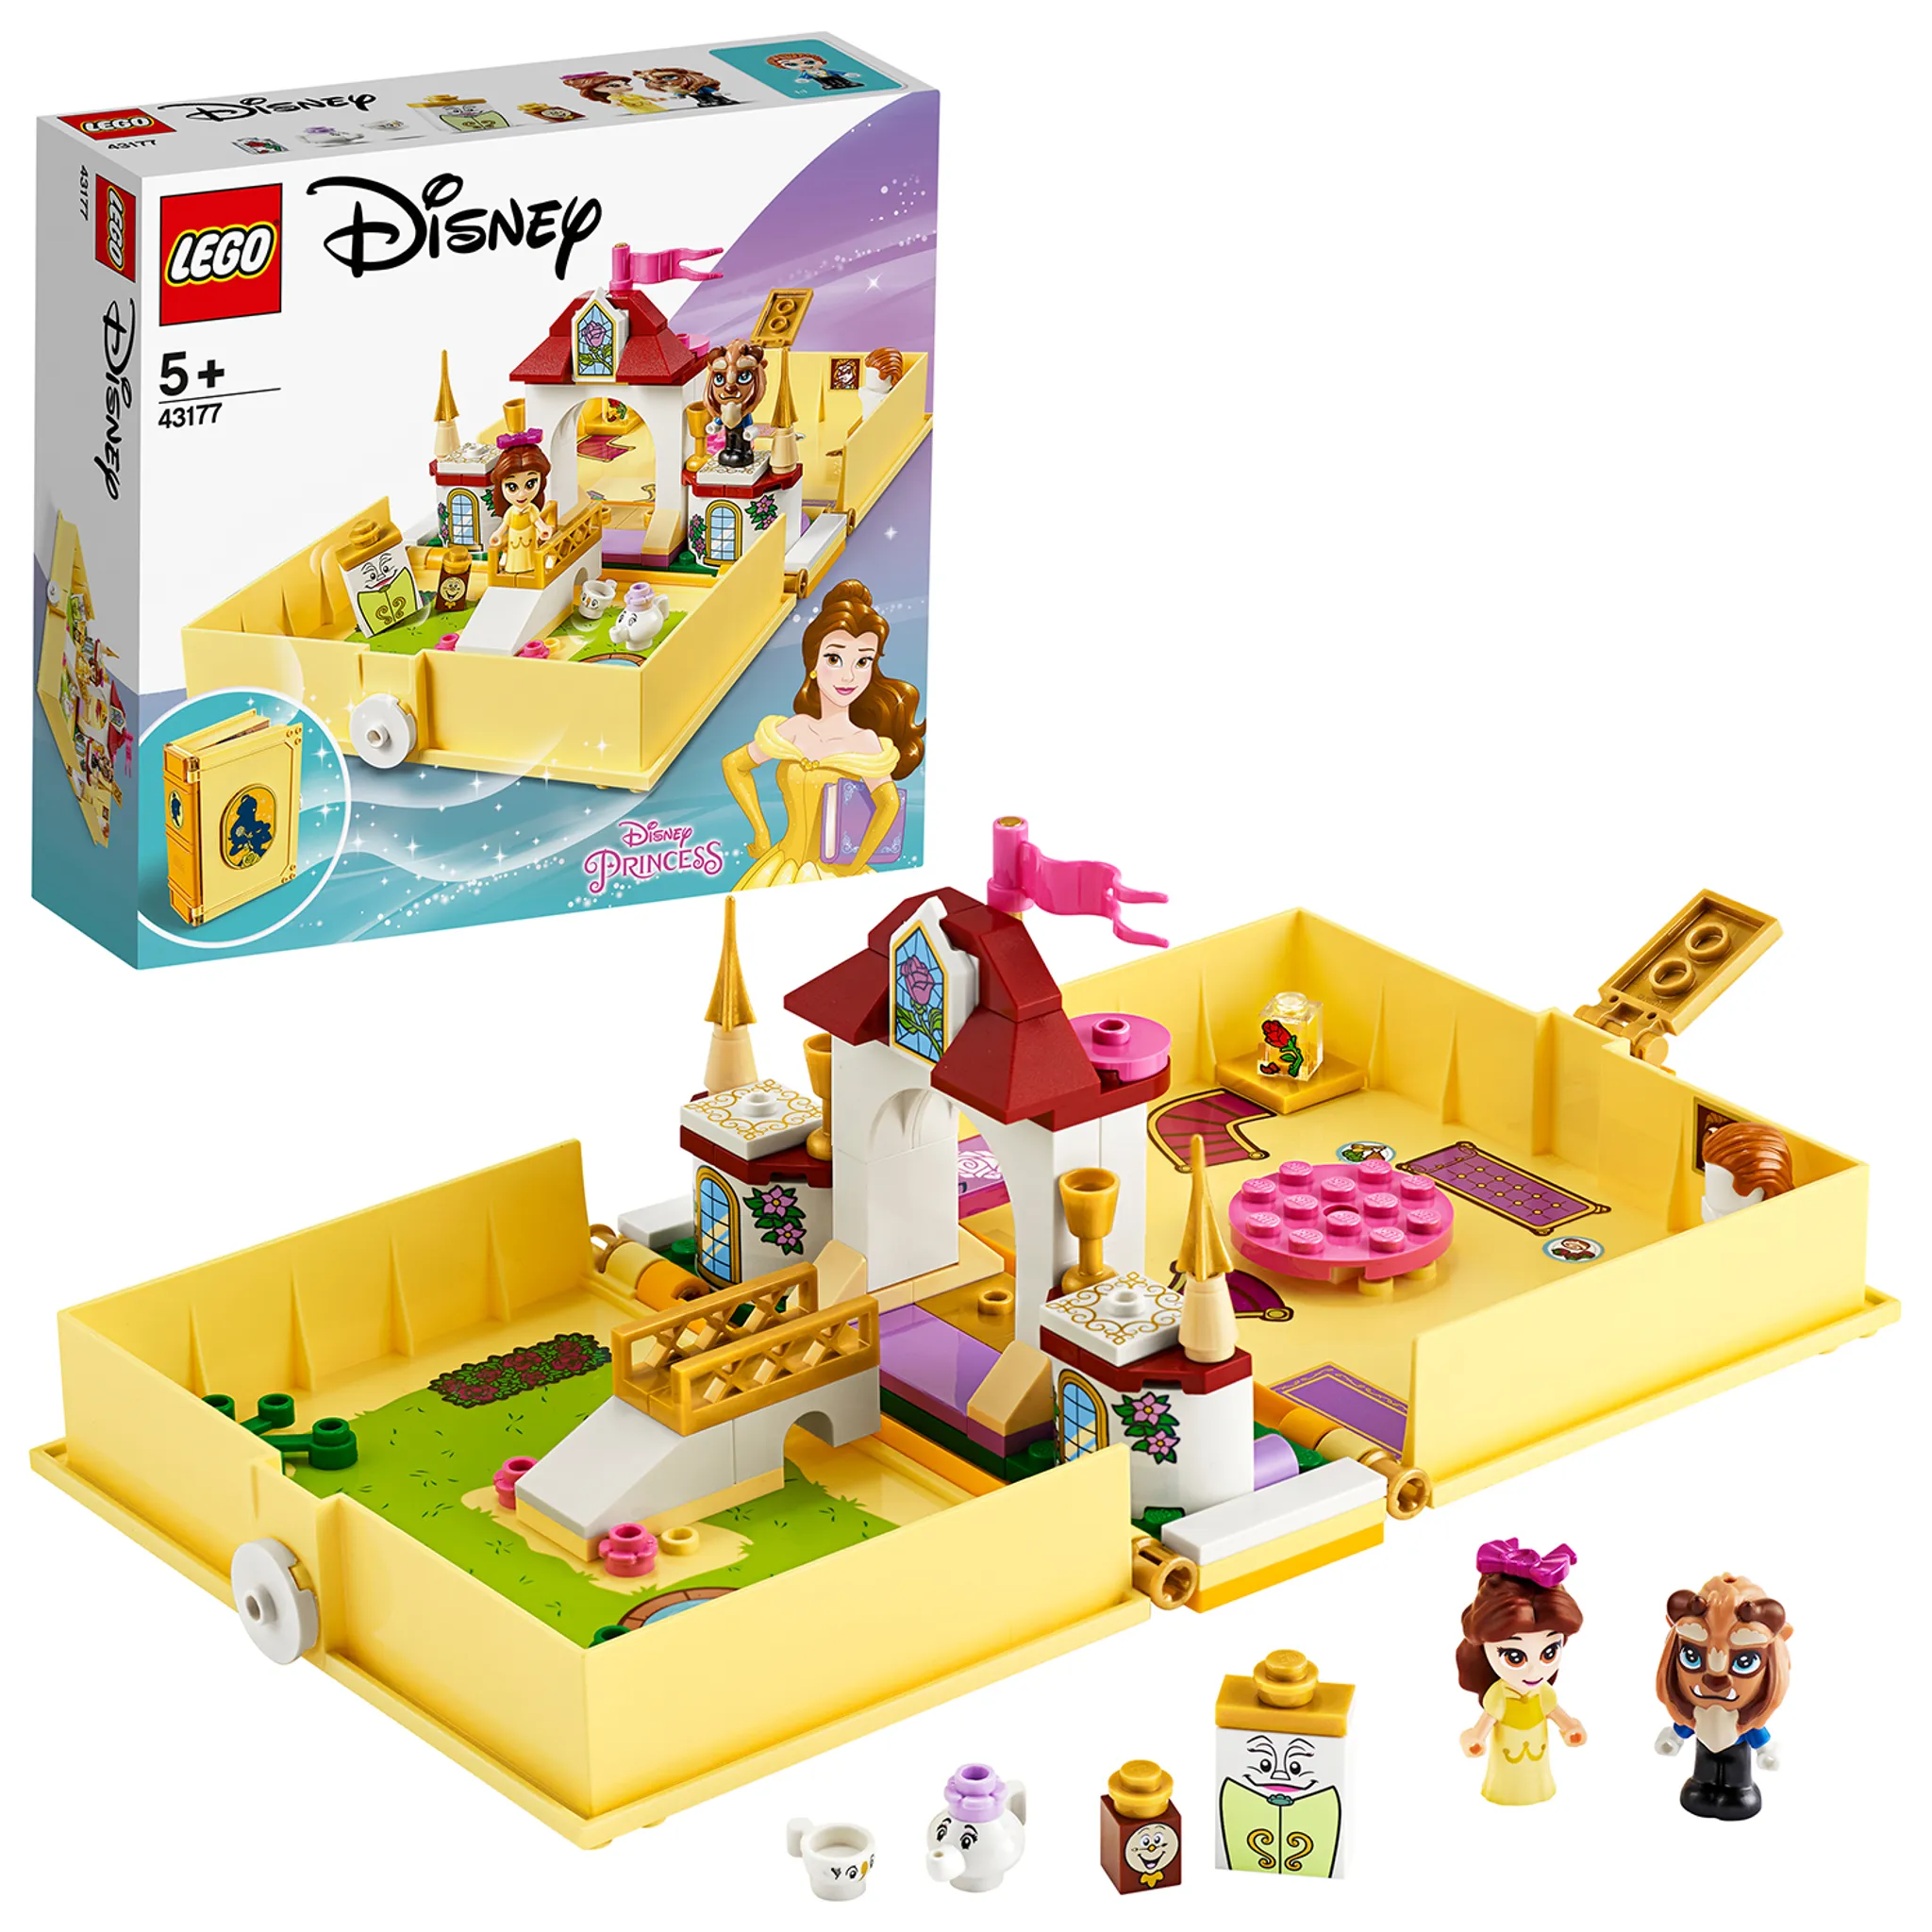 LEGO 43177 Disney Princess Belles